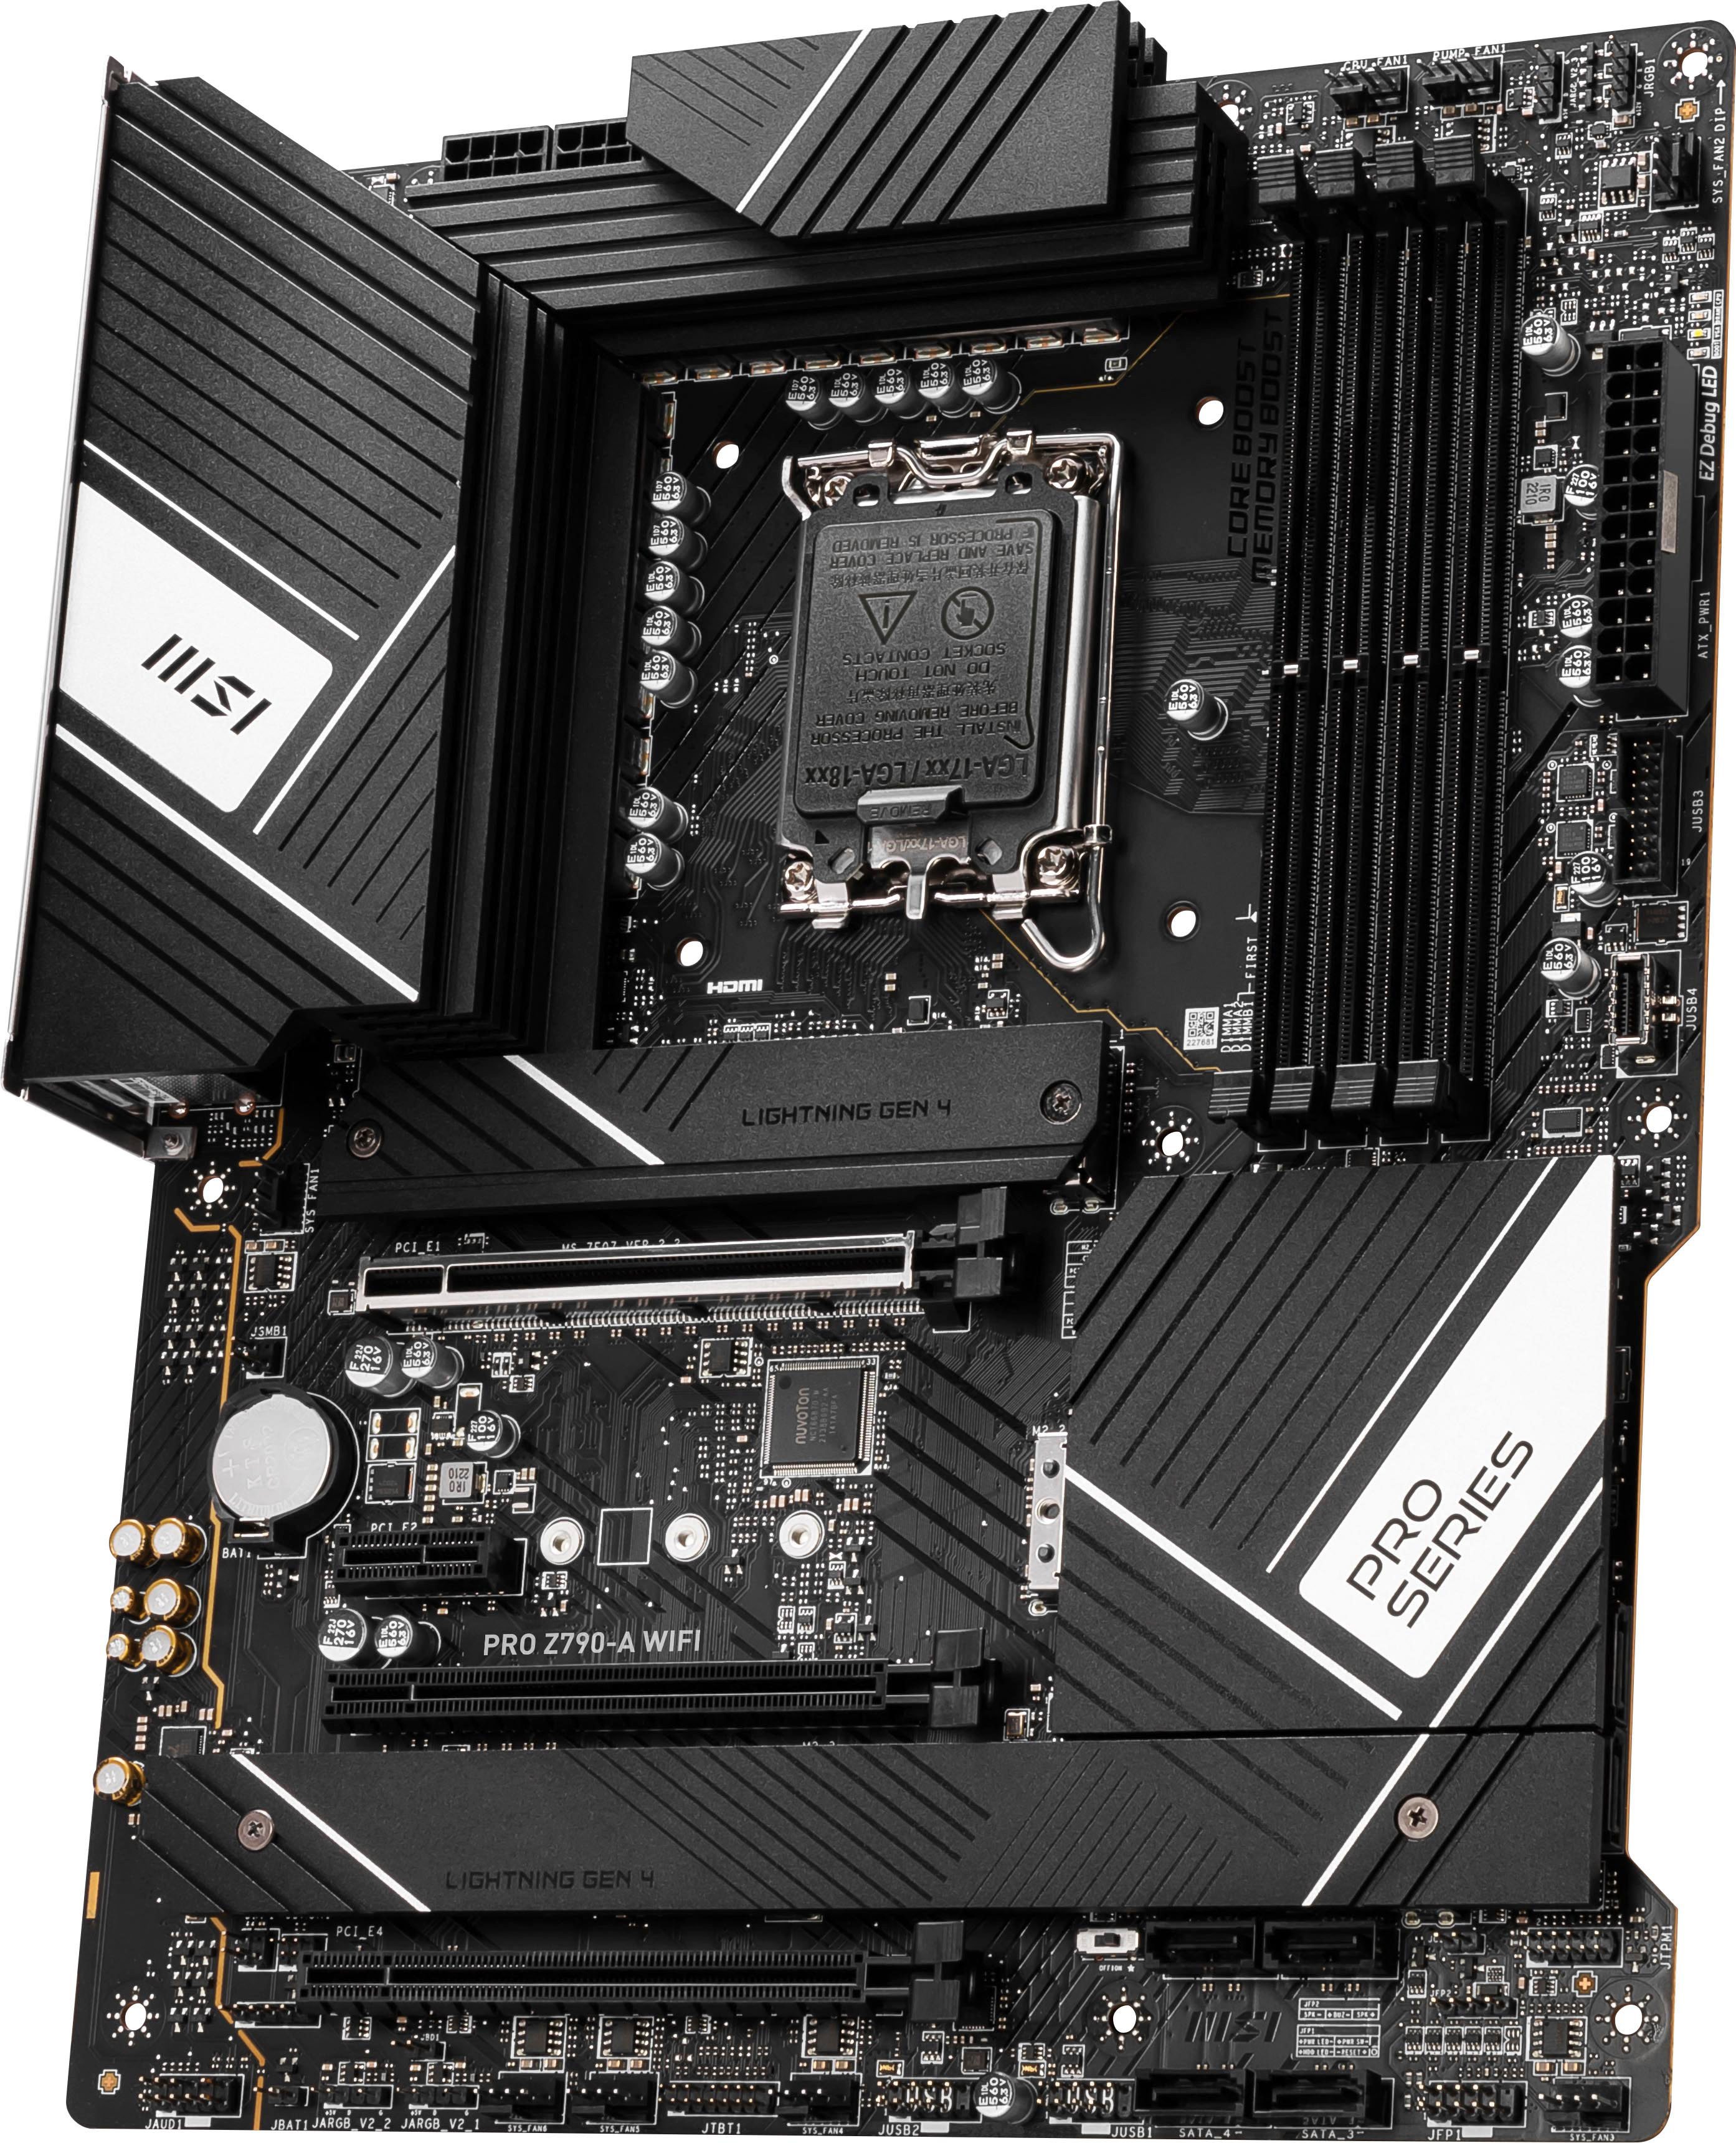 Intel Core i5-12600K 3.7 GHz 10-Core LGA 1700 Processor & MSI PRO Z790-A  WIFI ATX Motherboard Bundle